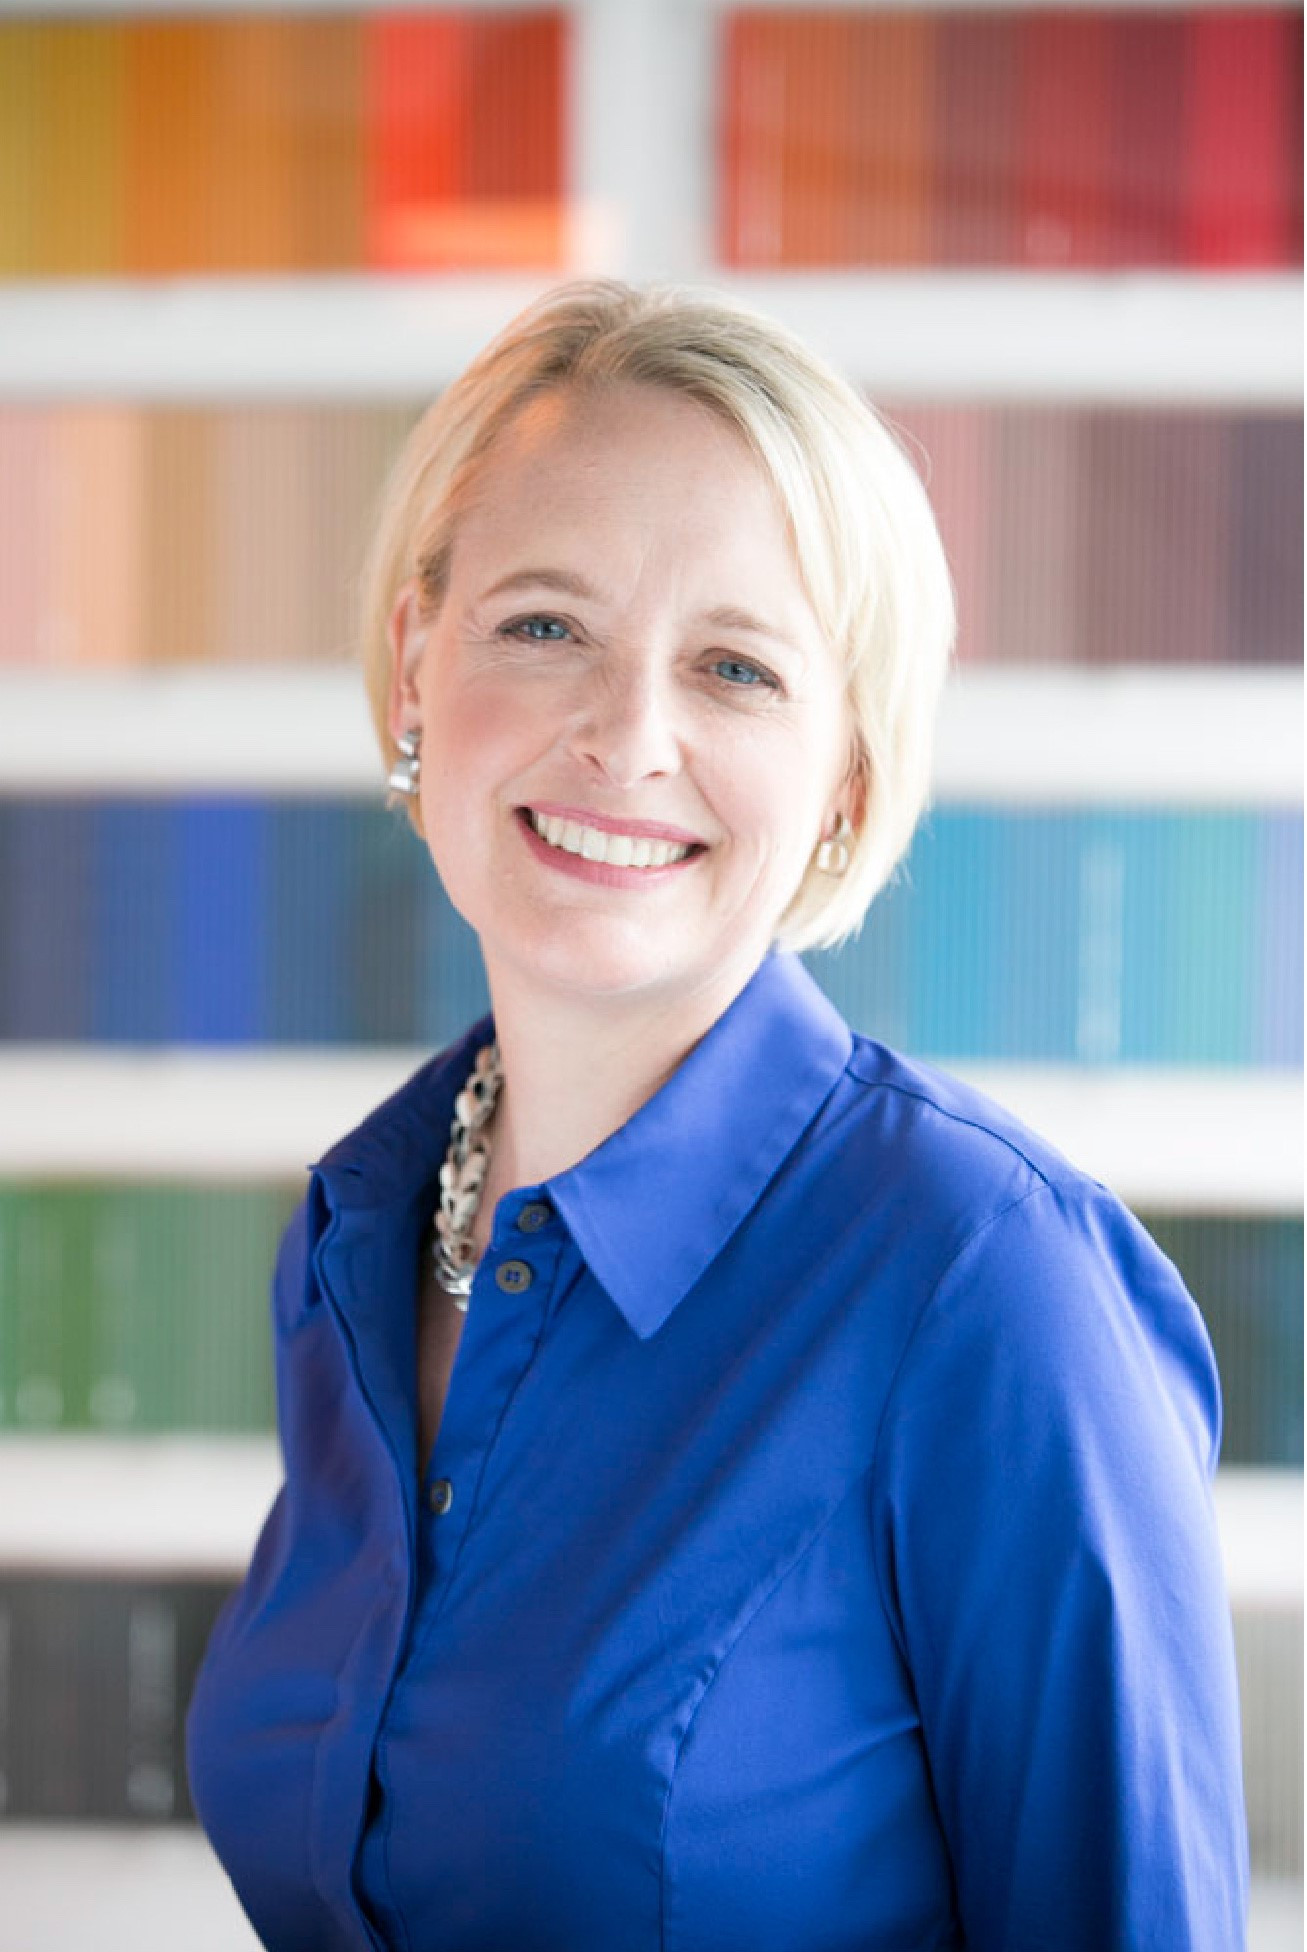 Accenture ha scelto Julie Sweet come nuovo Chief Executive Officer in carica dal 1° settembre 2019